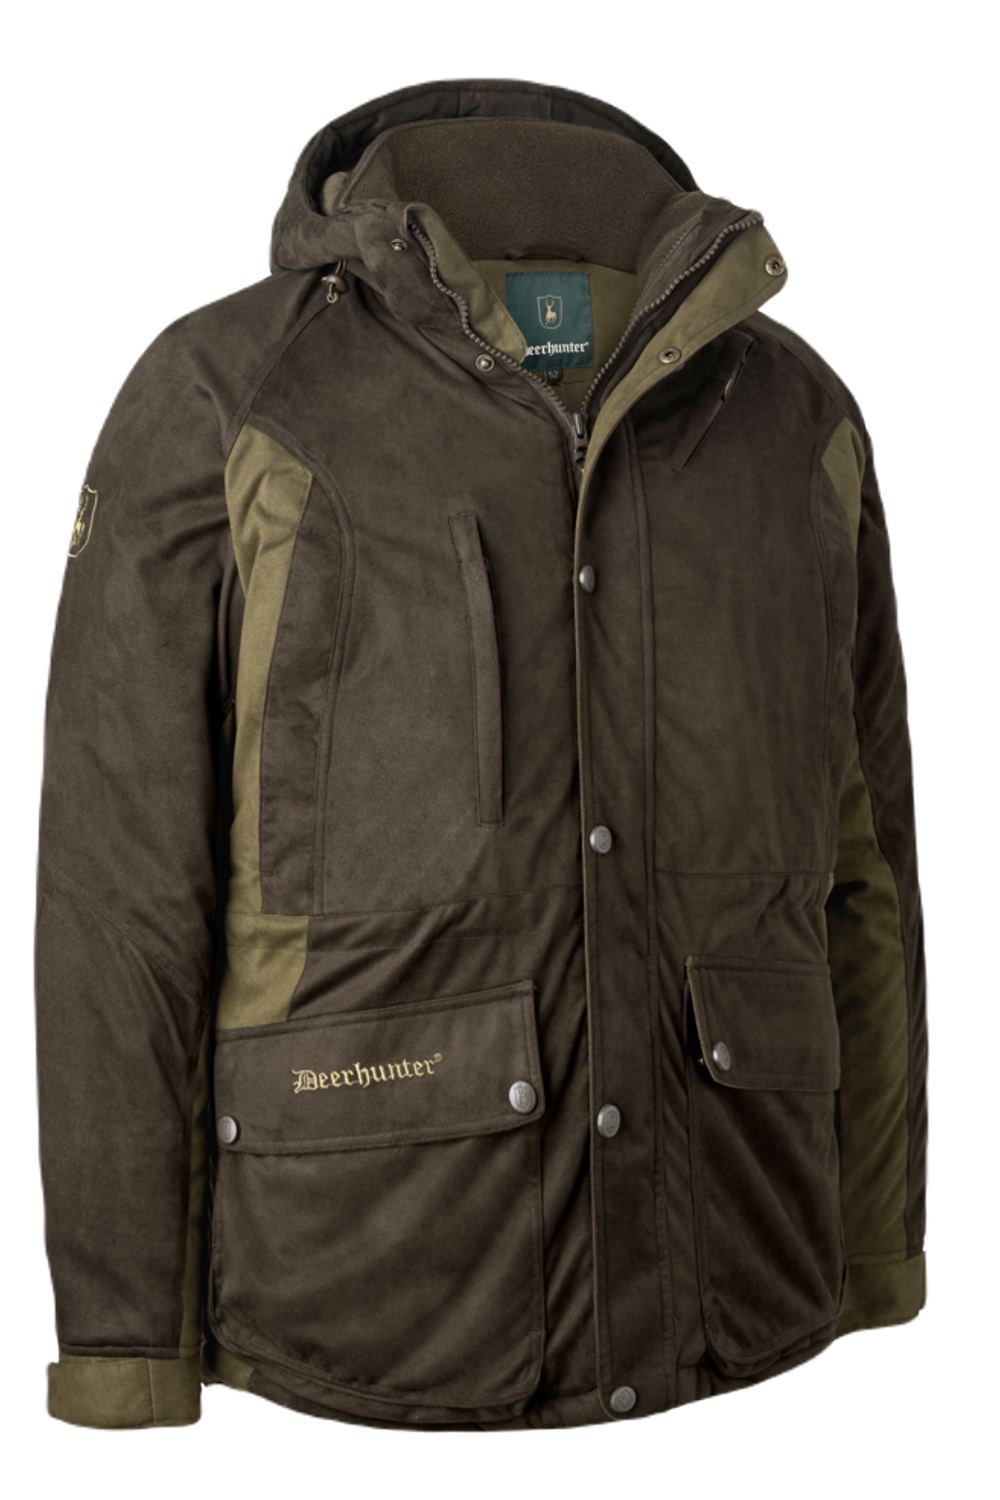 Deerhunter Explore Winter Jacket In Walnut 